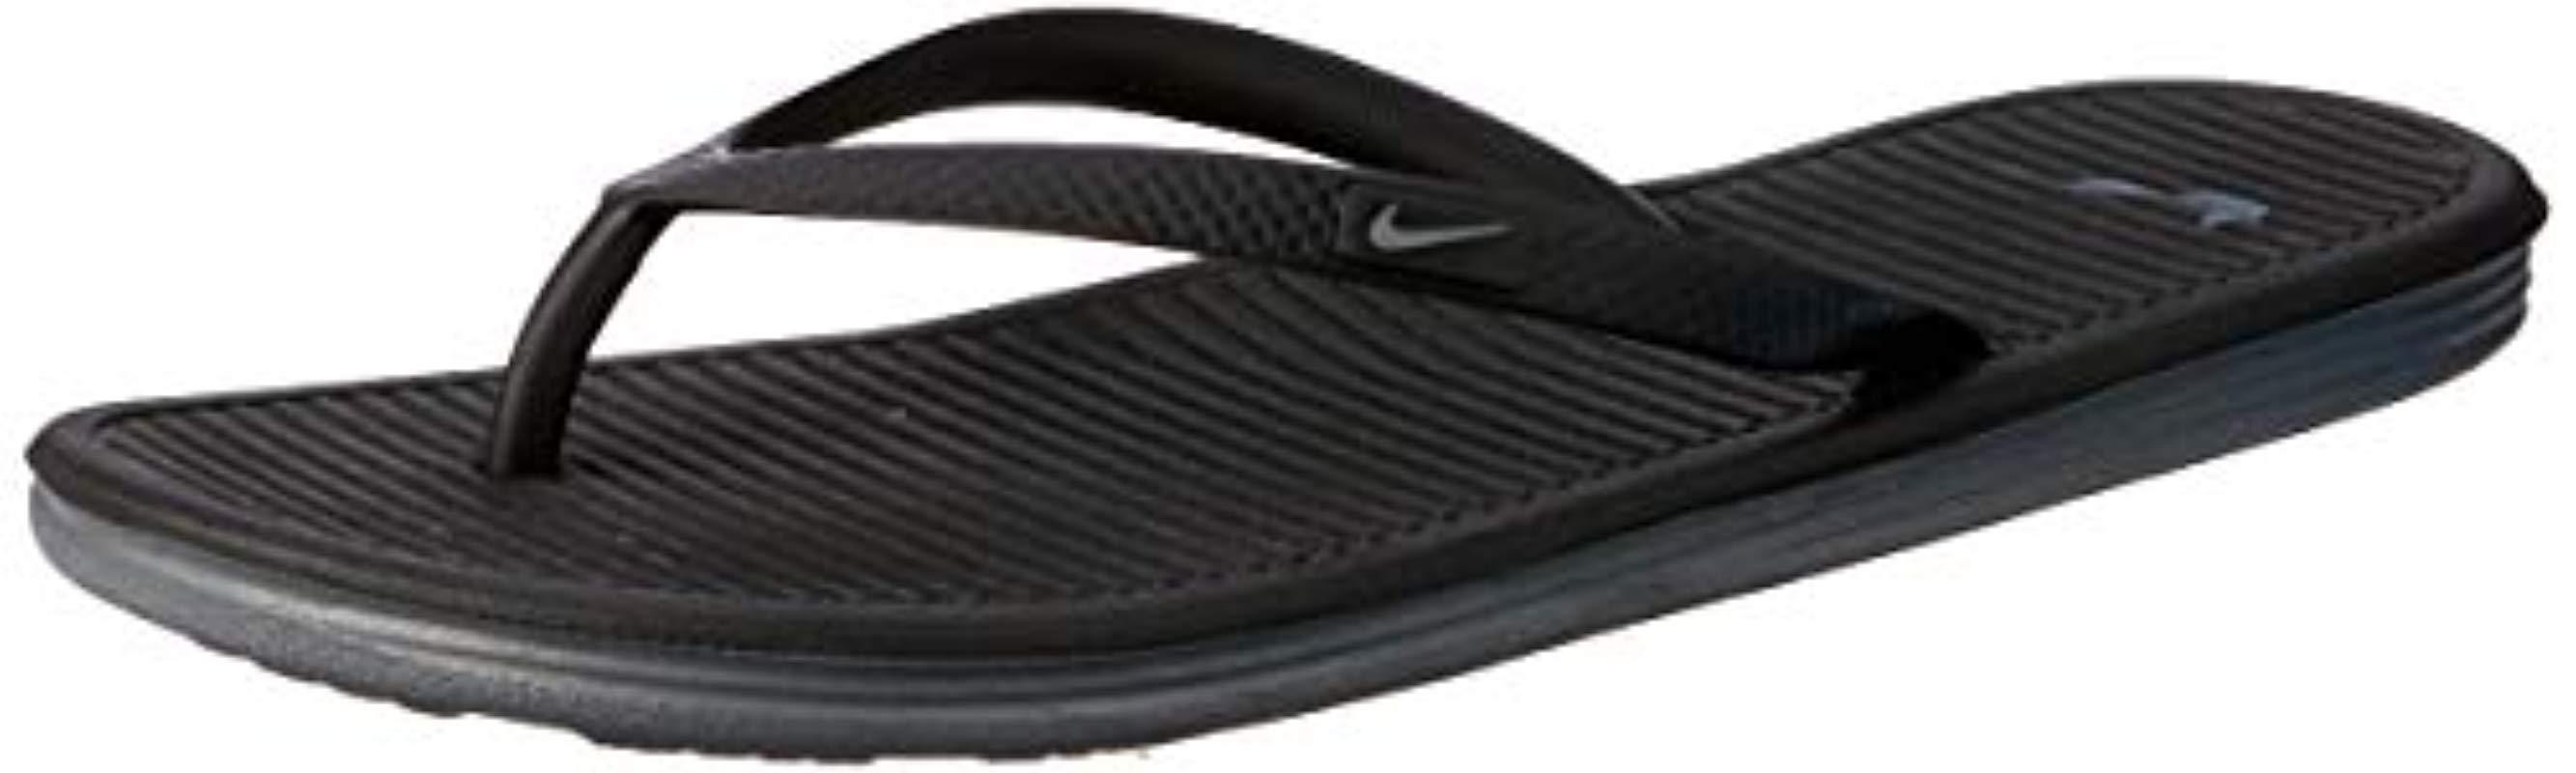 Disipar cebolla prima Nike Solarsoft Thong 2 Athletic Sandal in Black | Lyst